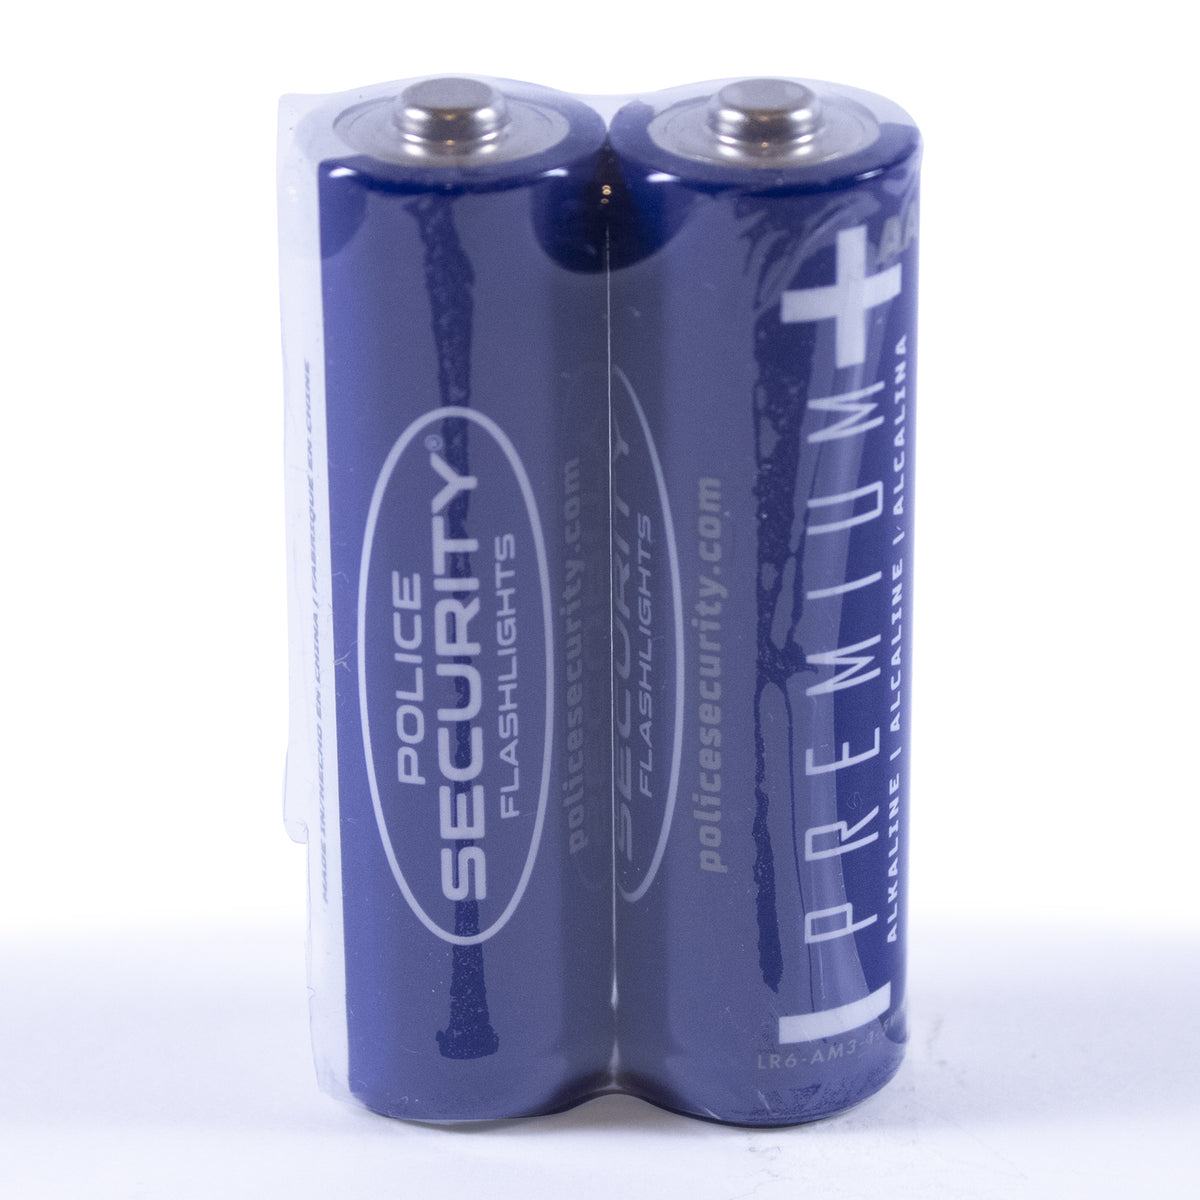 2 AA Batteries